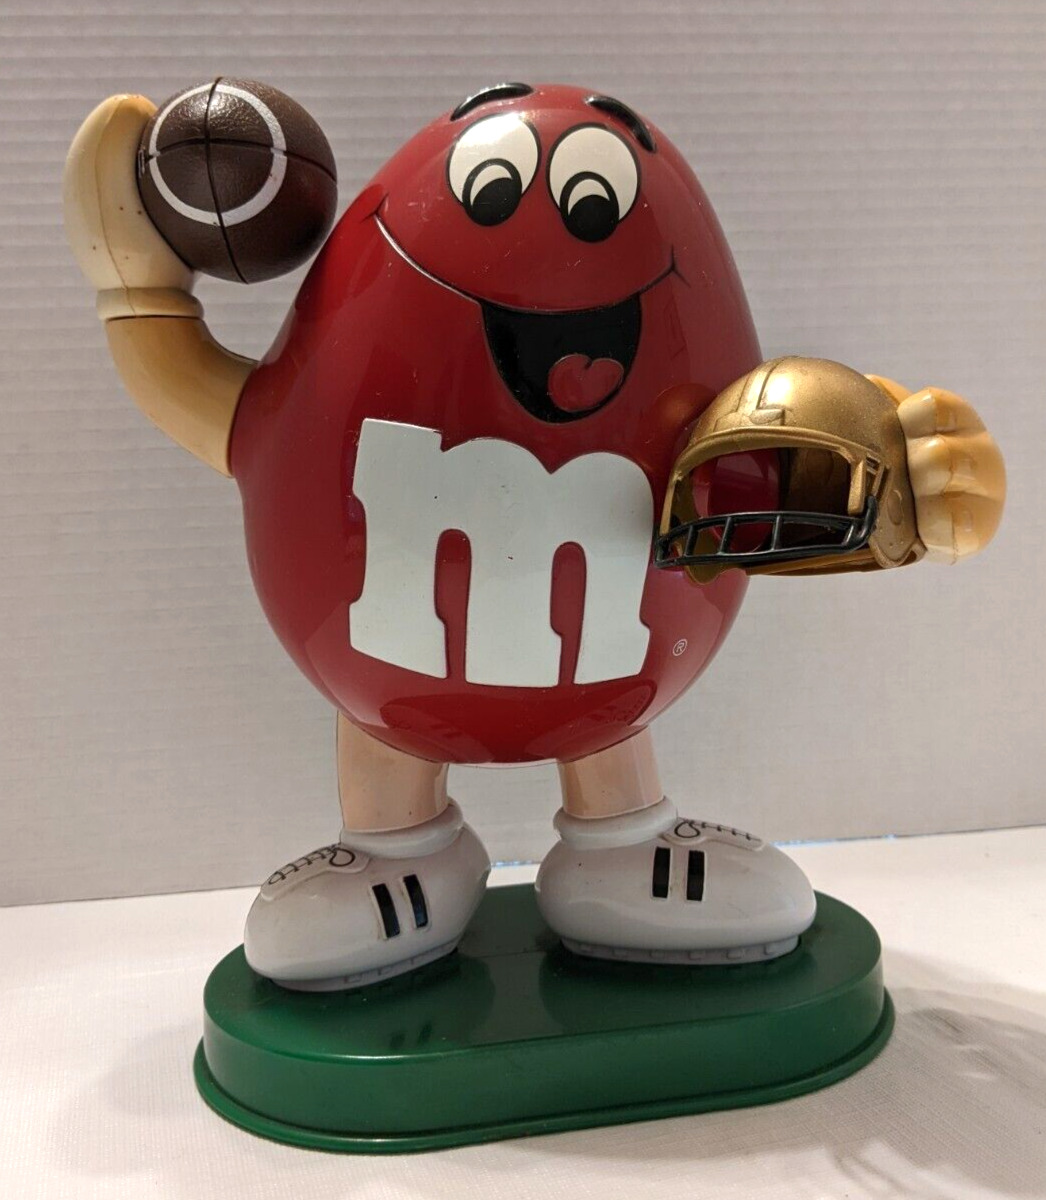 Vintage M&Ms Red Peanut Football Player Gold Helmet Candy Dispenser 1995